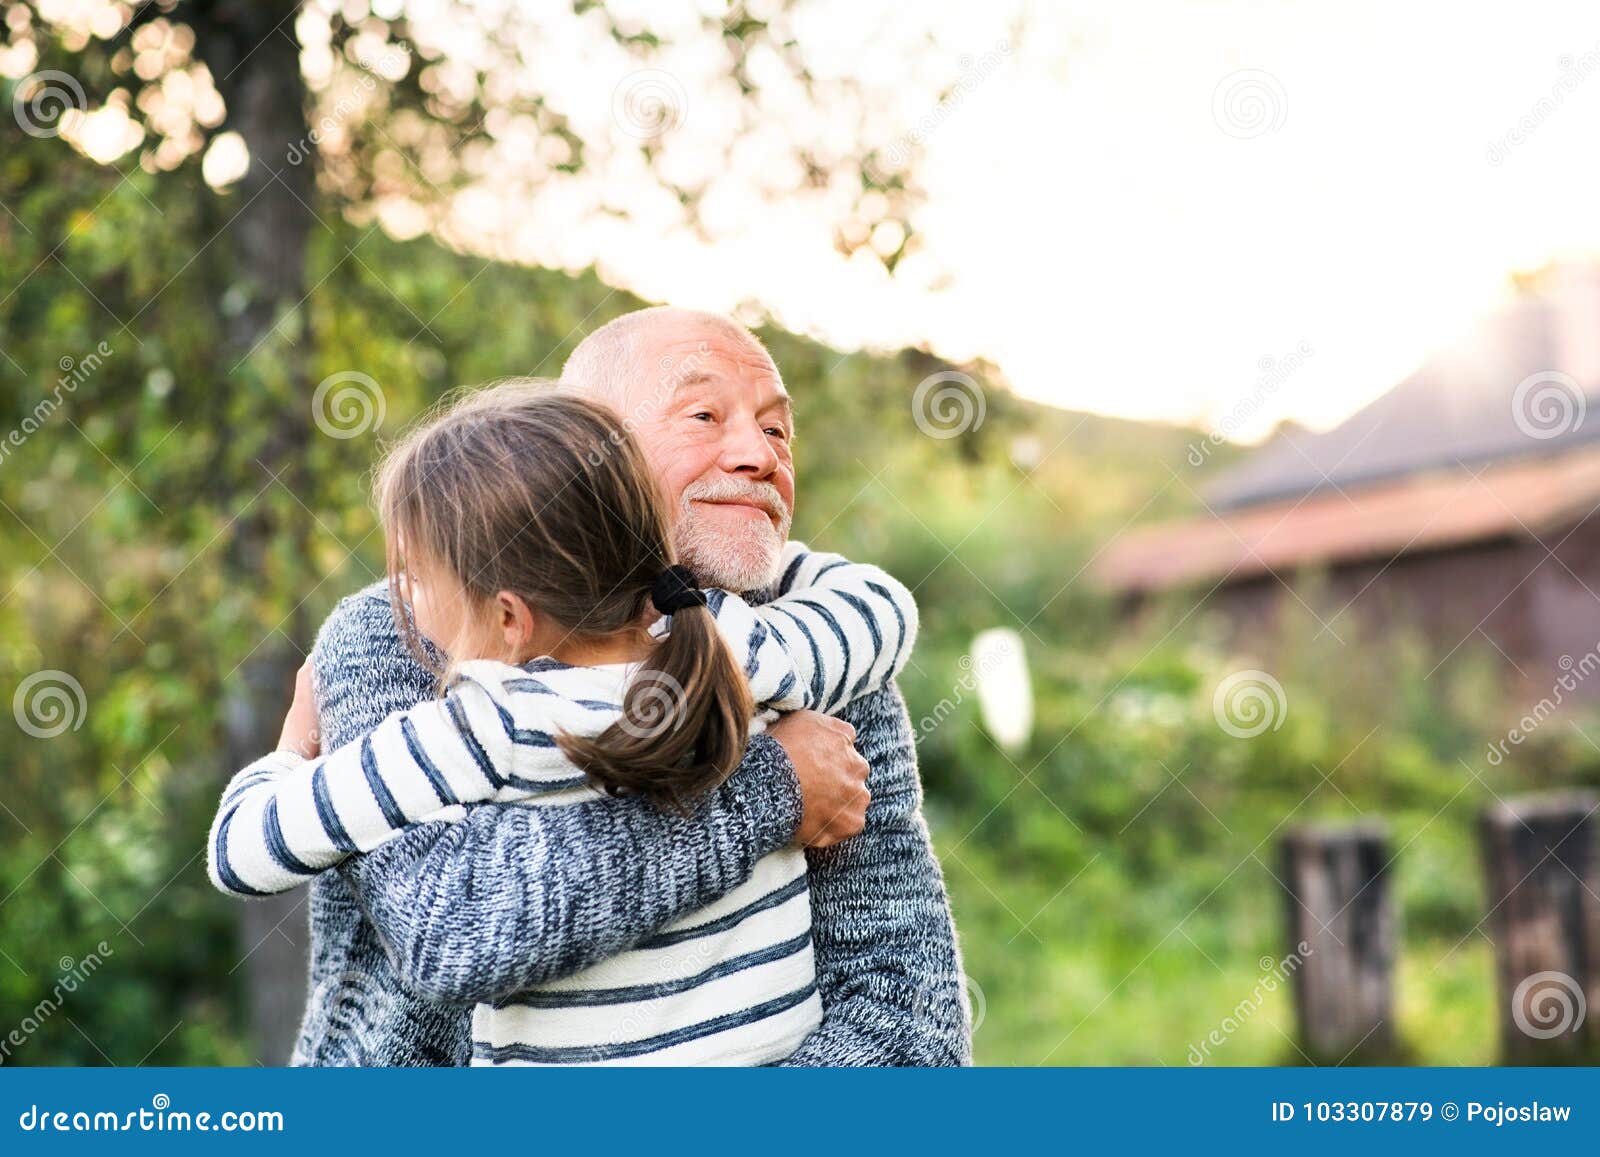 grandfather giving his grandaughter a hug.